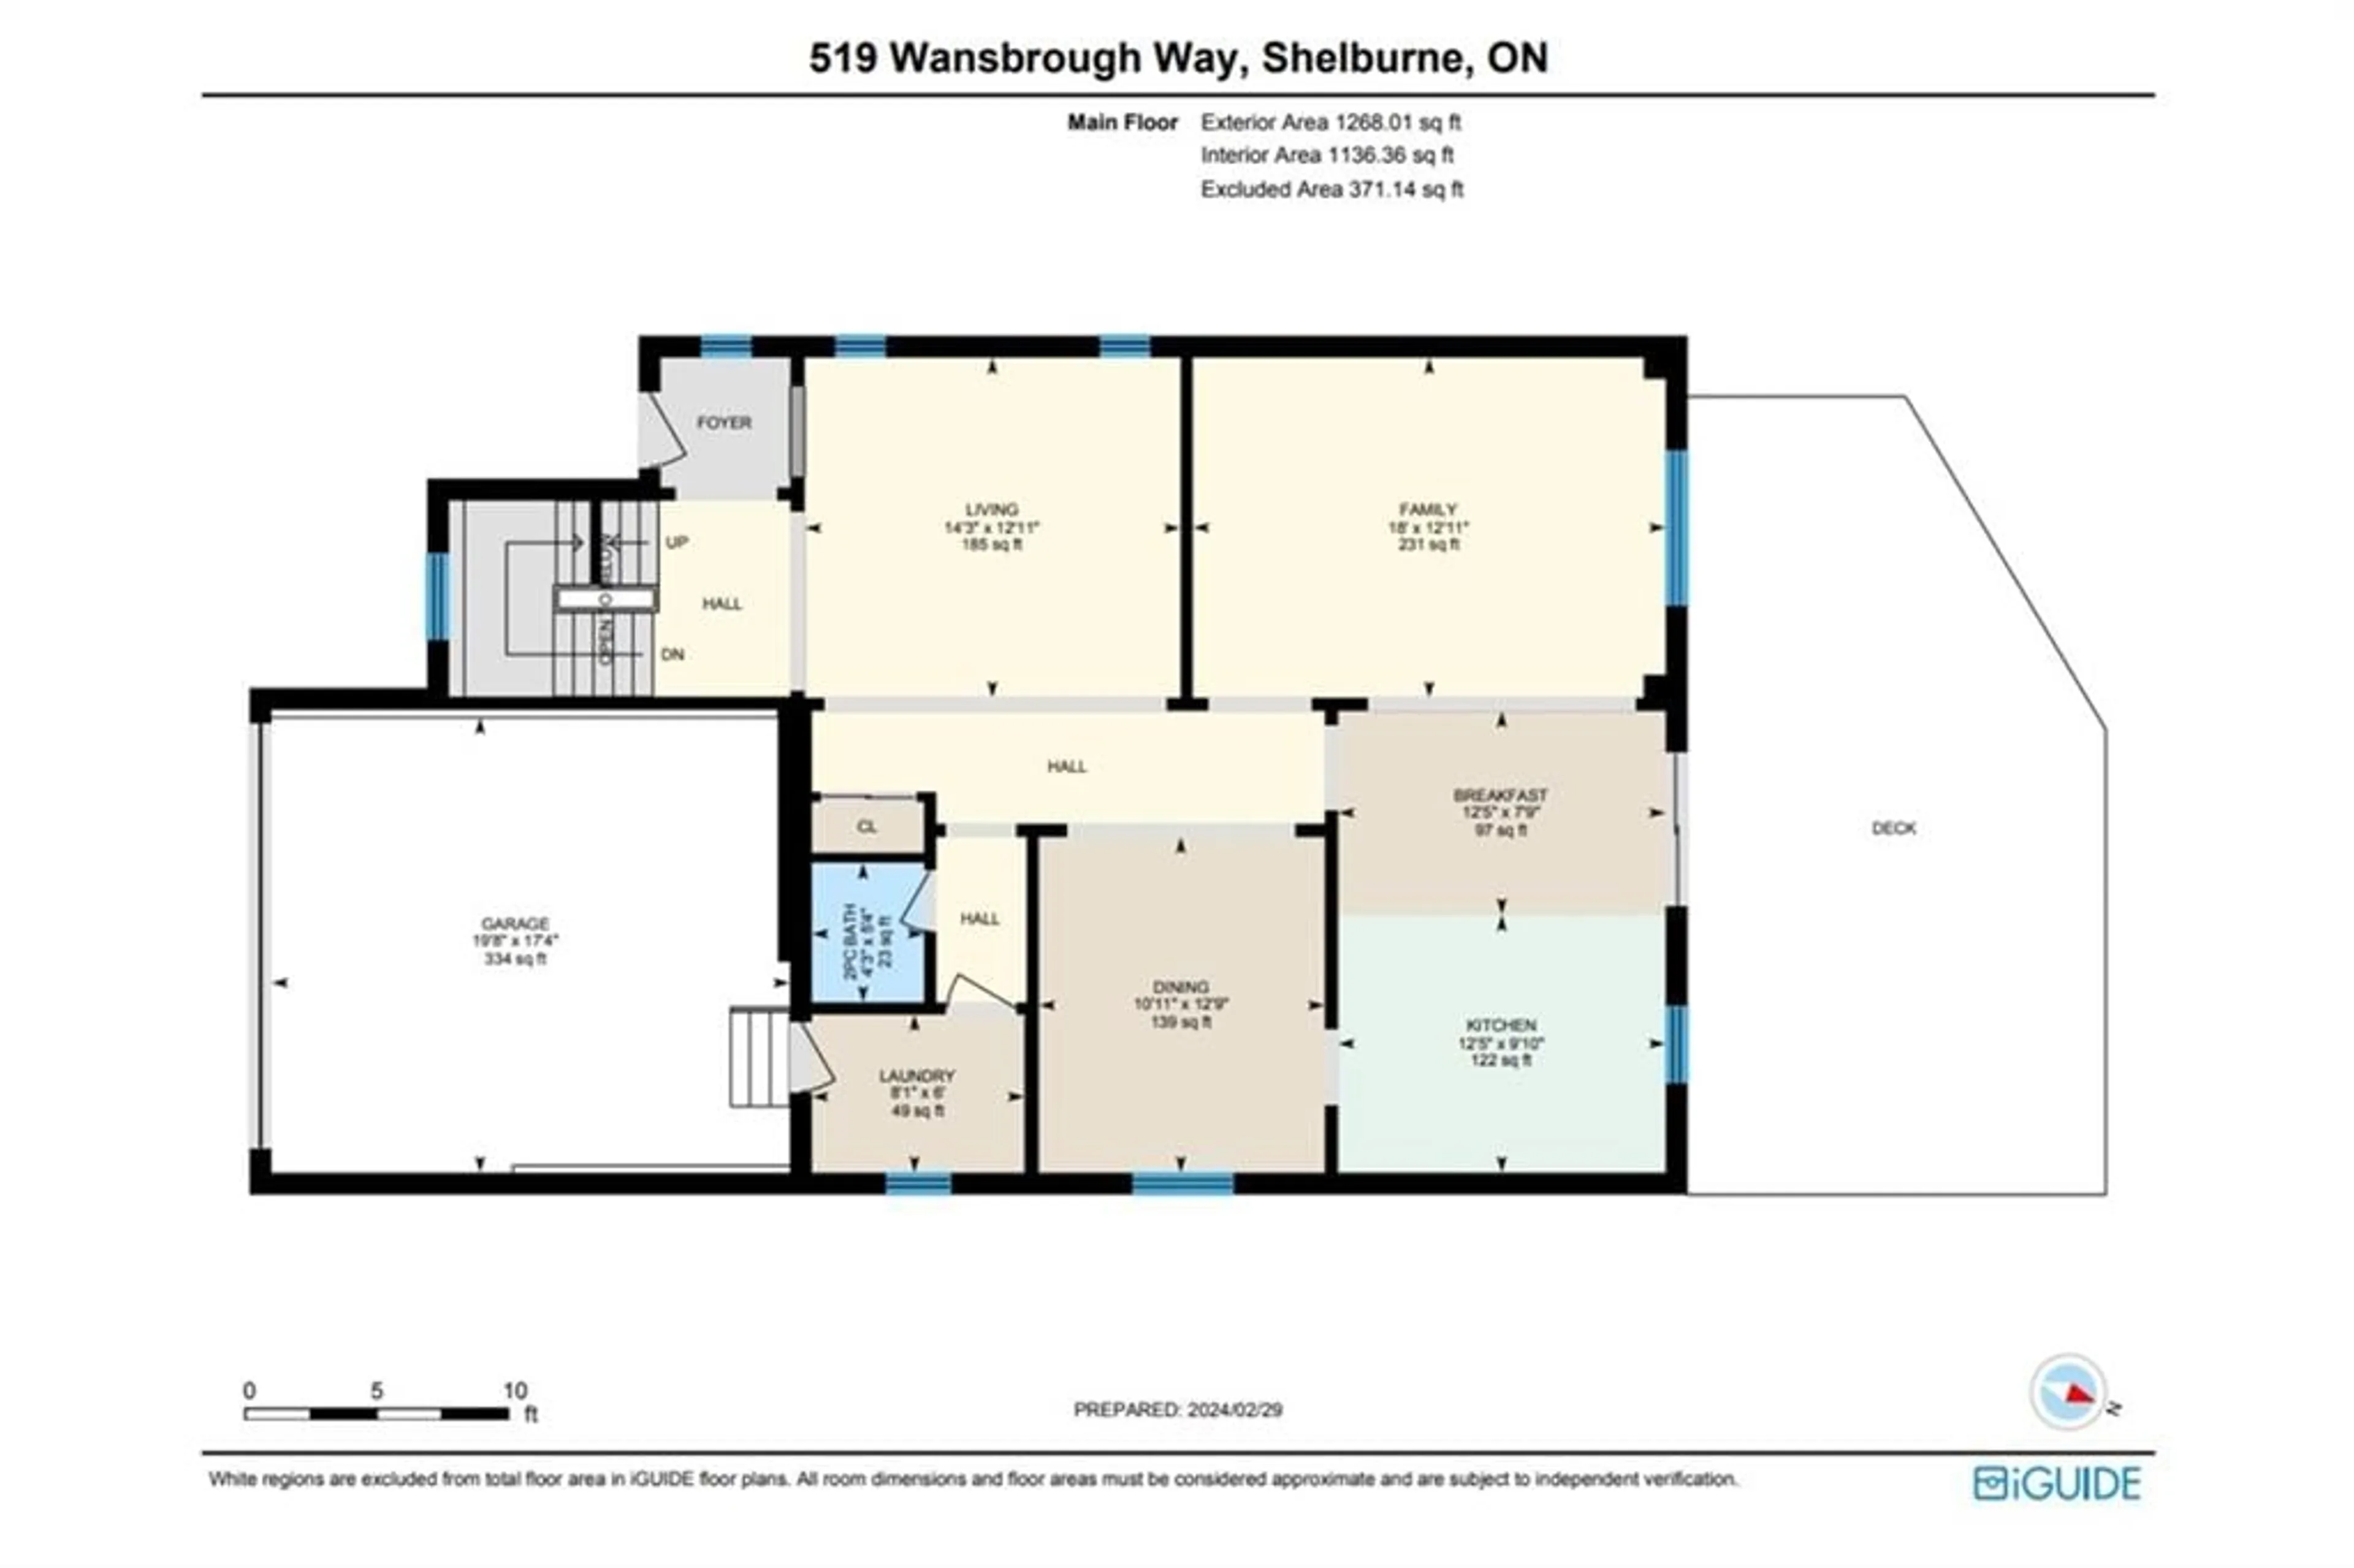 Floor plan for 519 Wansbrough Way, Shelburne Ontario L9V 2S8